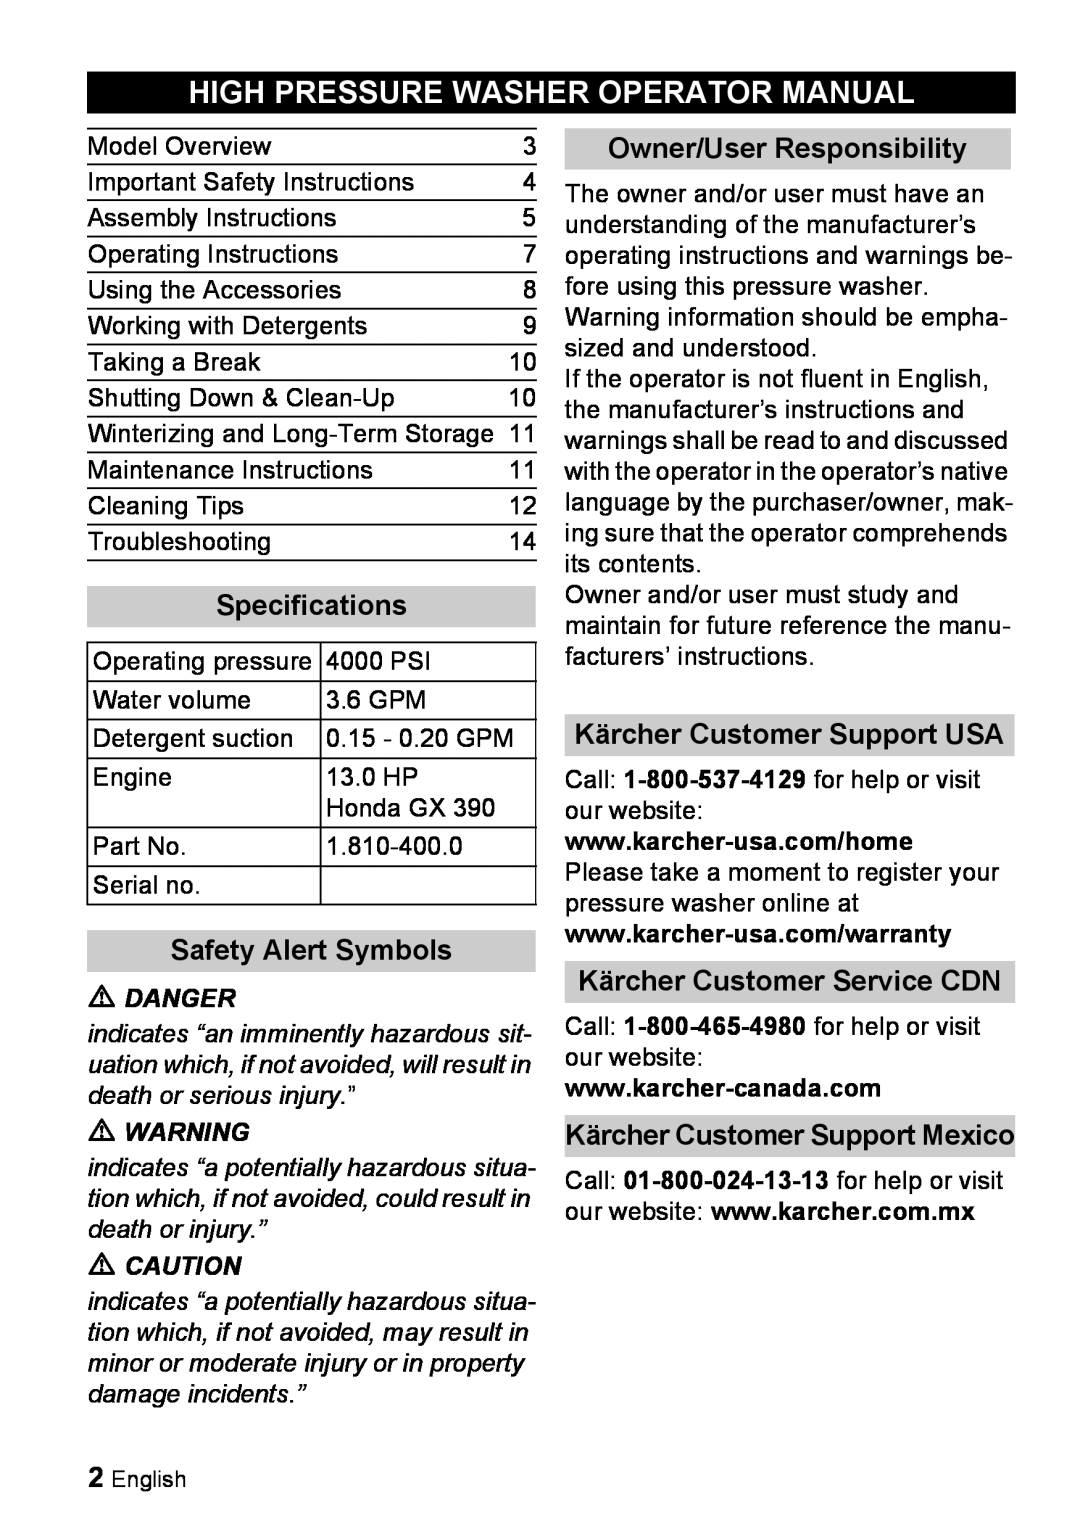 Karcher G 4000 SH High Pressure Washer Operator Manual, Specifications, Safety Alert Symbols, Owner/User Responsibility 